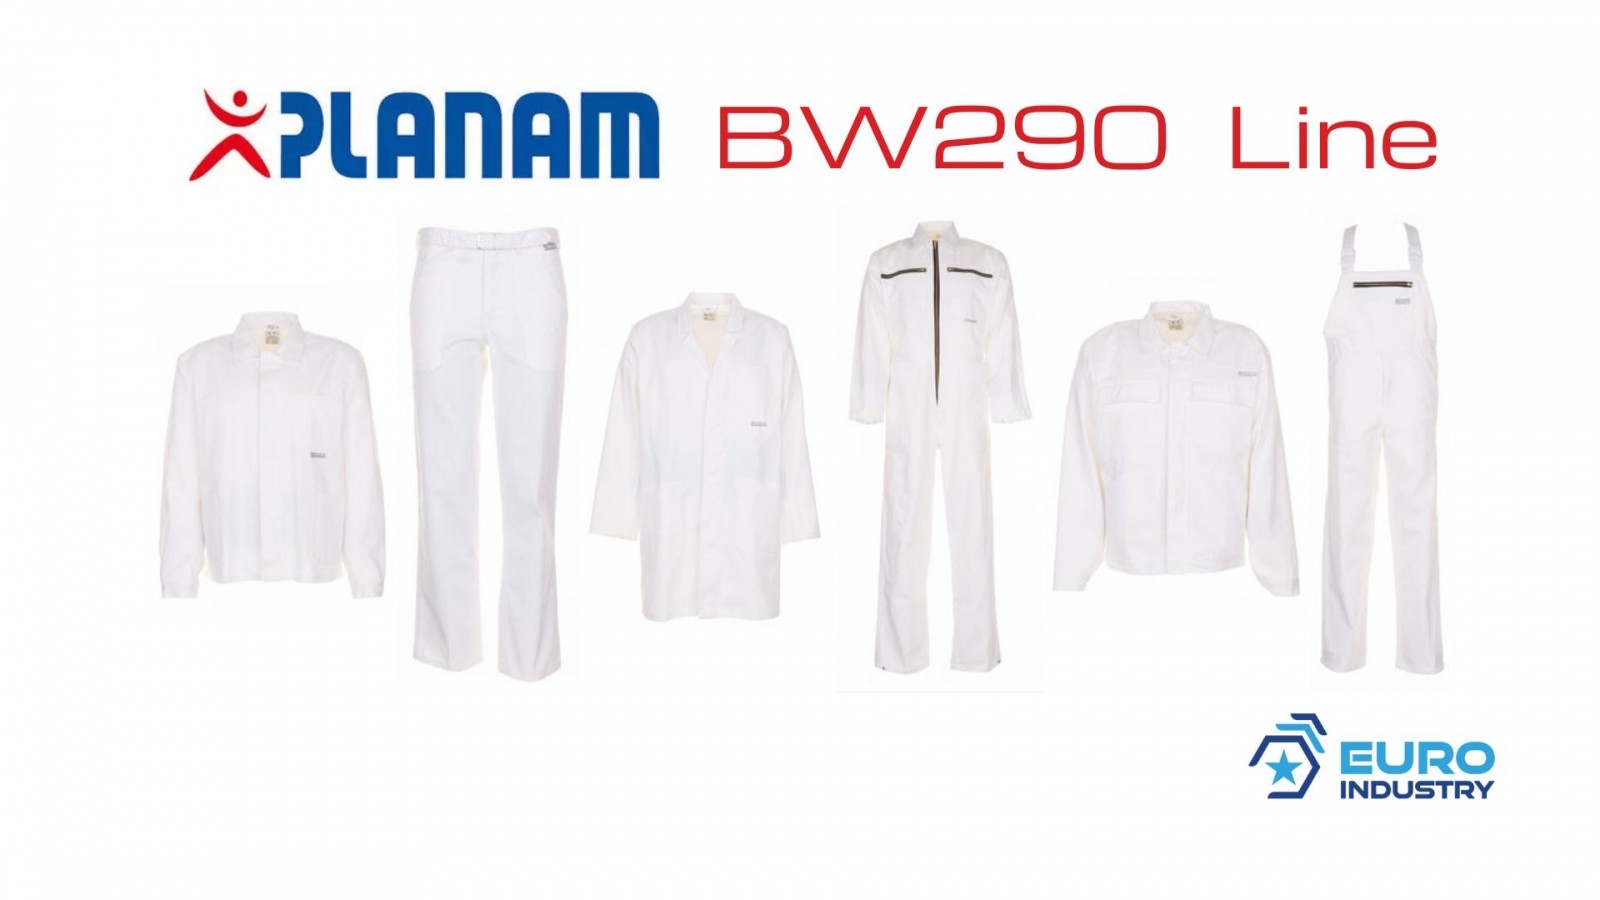 pics/Planam/bw-290/planam-bw-290-linie-reinweiss-baumwolle-details.jpg